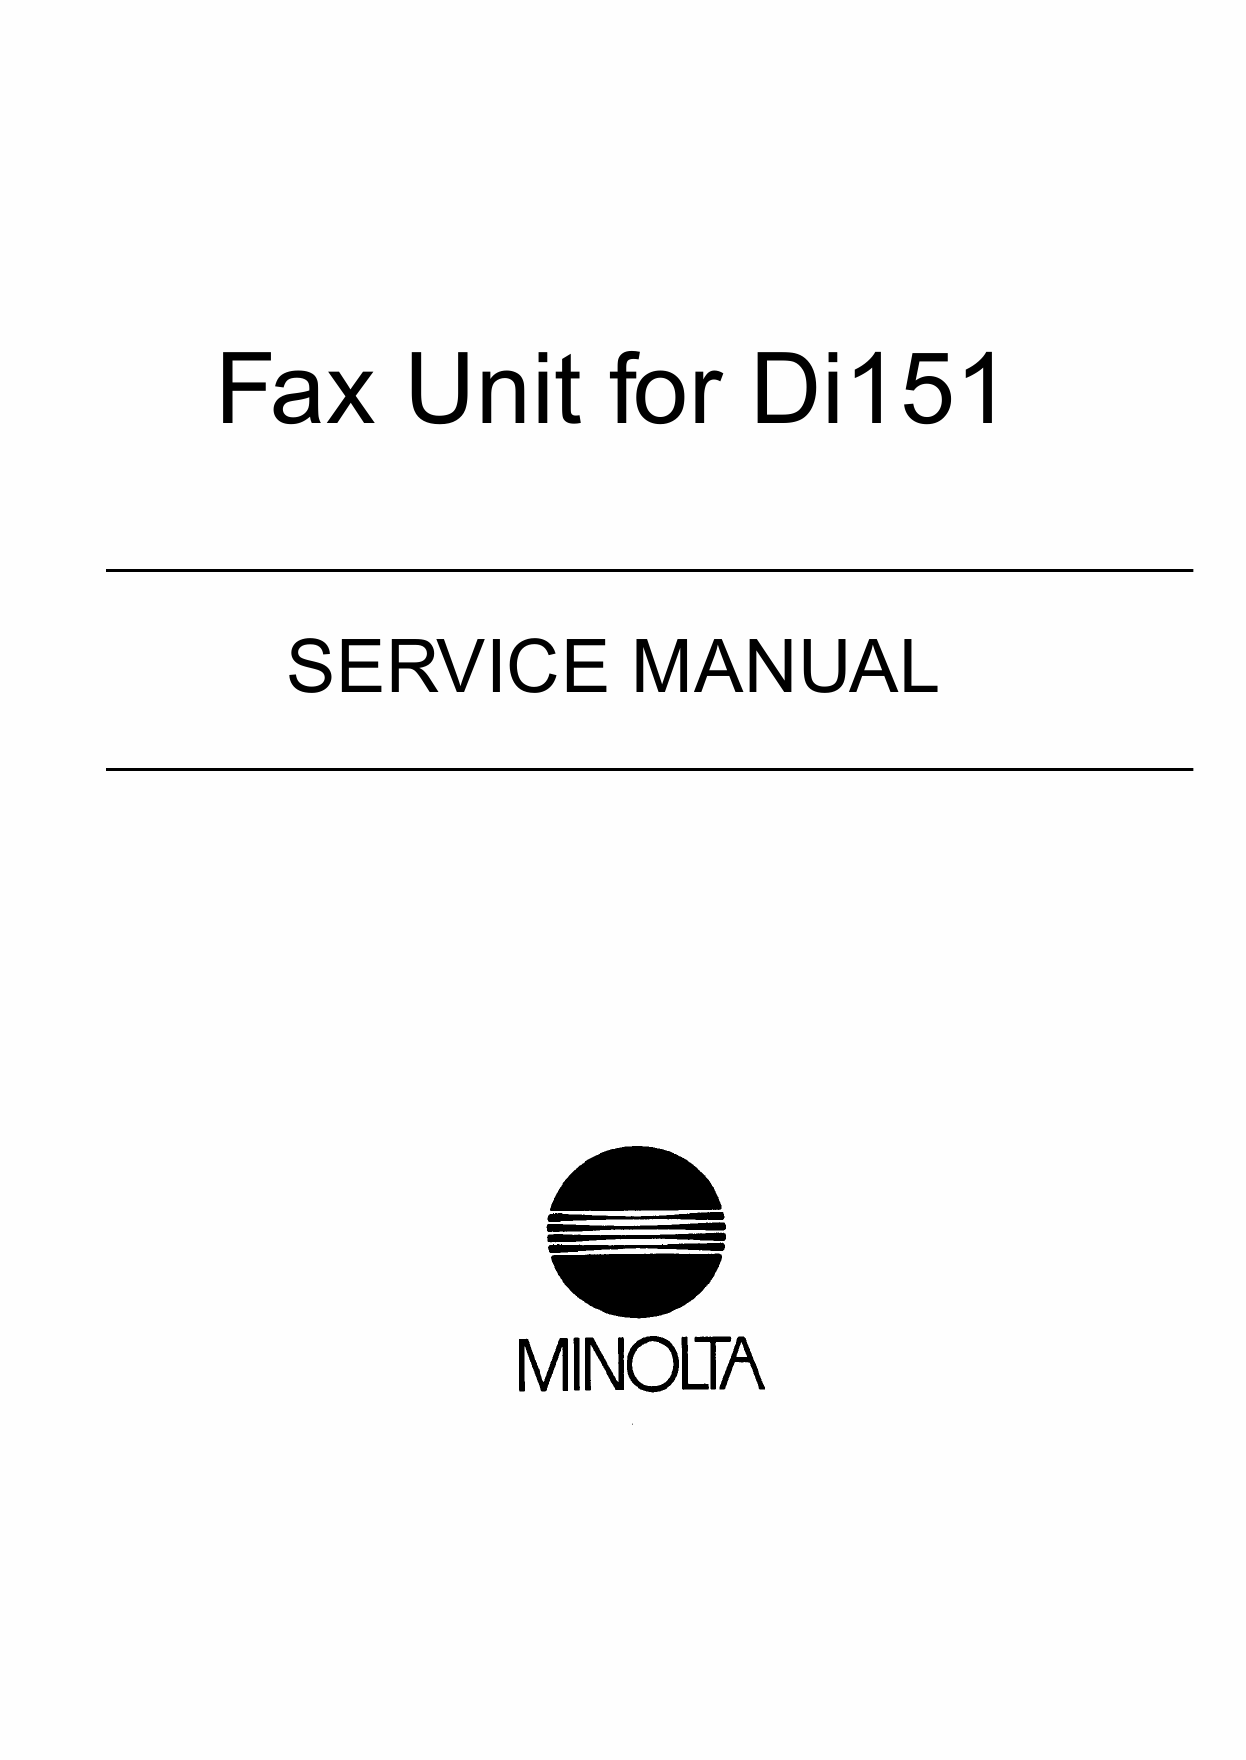 Konica-Minolta MINOLTA Di151 FAX Service Manual-1